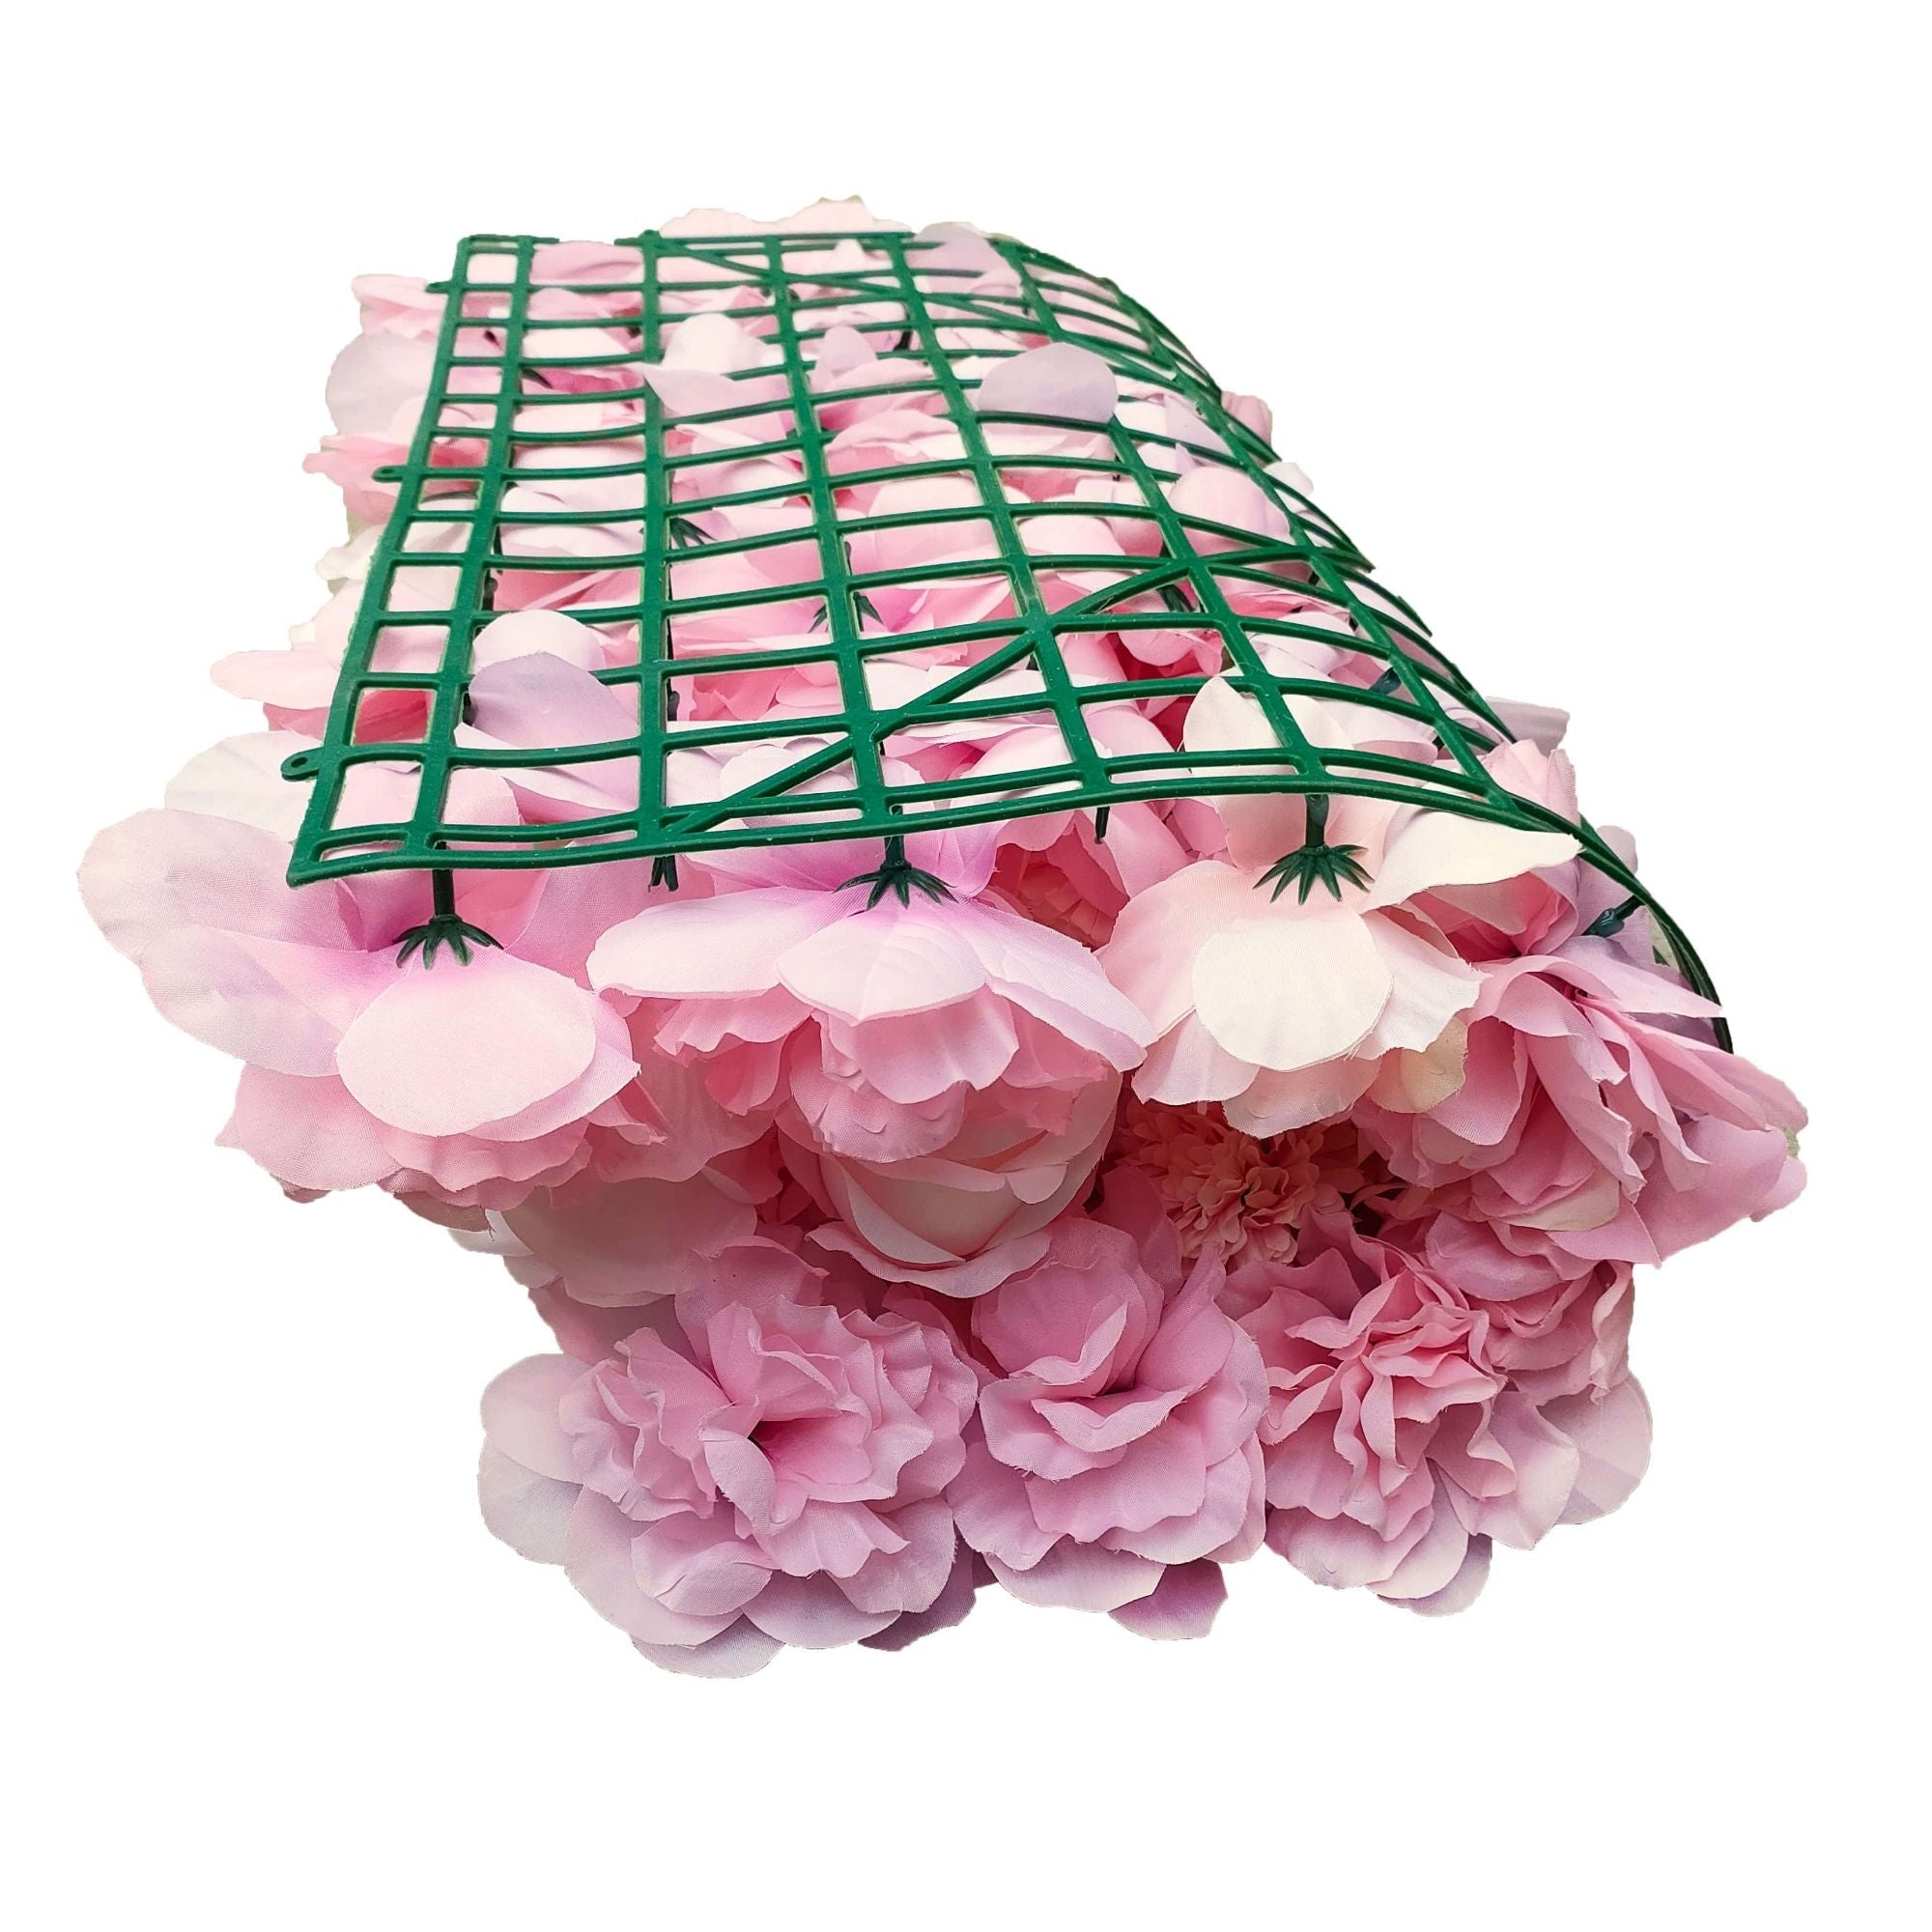 Artificial Flower Wall Backdrop Panel 40cm X 60cm Mixed White & Cream & Pink Flowers - Designer Vertical Gardens artificial green walls with flowers Flowering plants